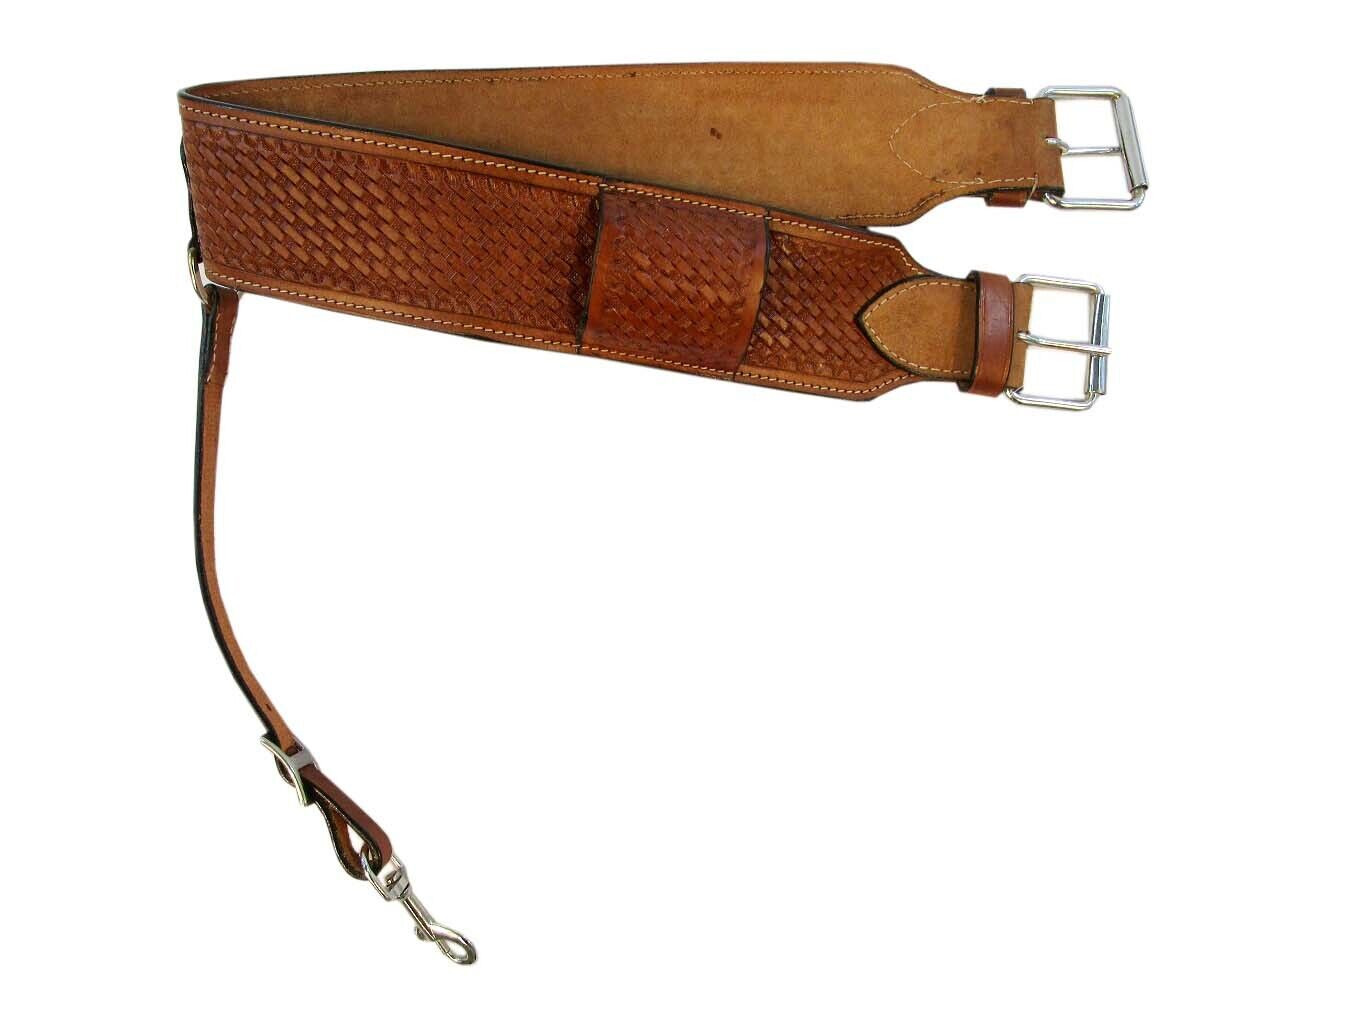 Used Basketweave Leather Tooled Horse Saddle Rear Cinch Girth Basket Weaved